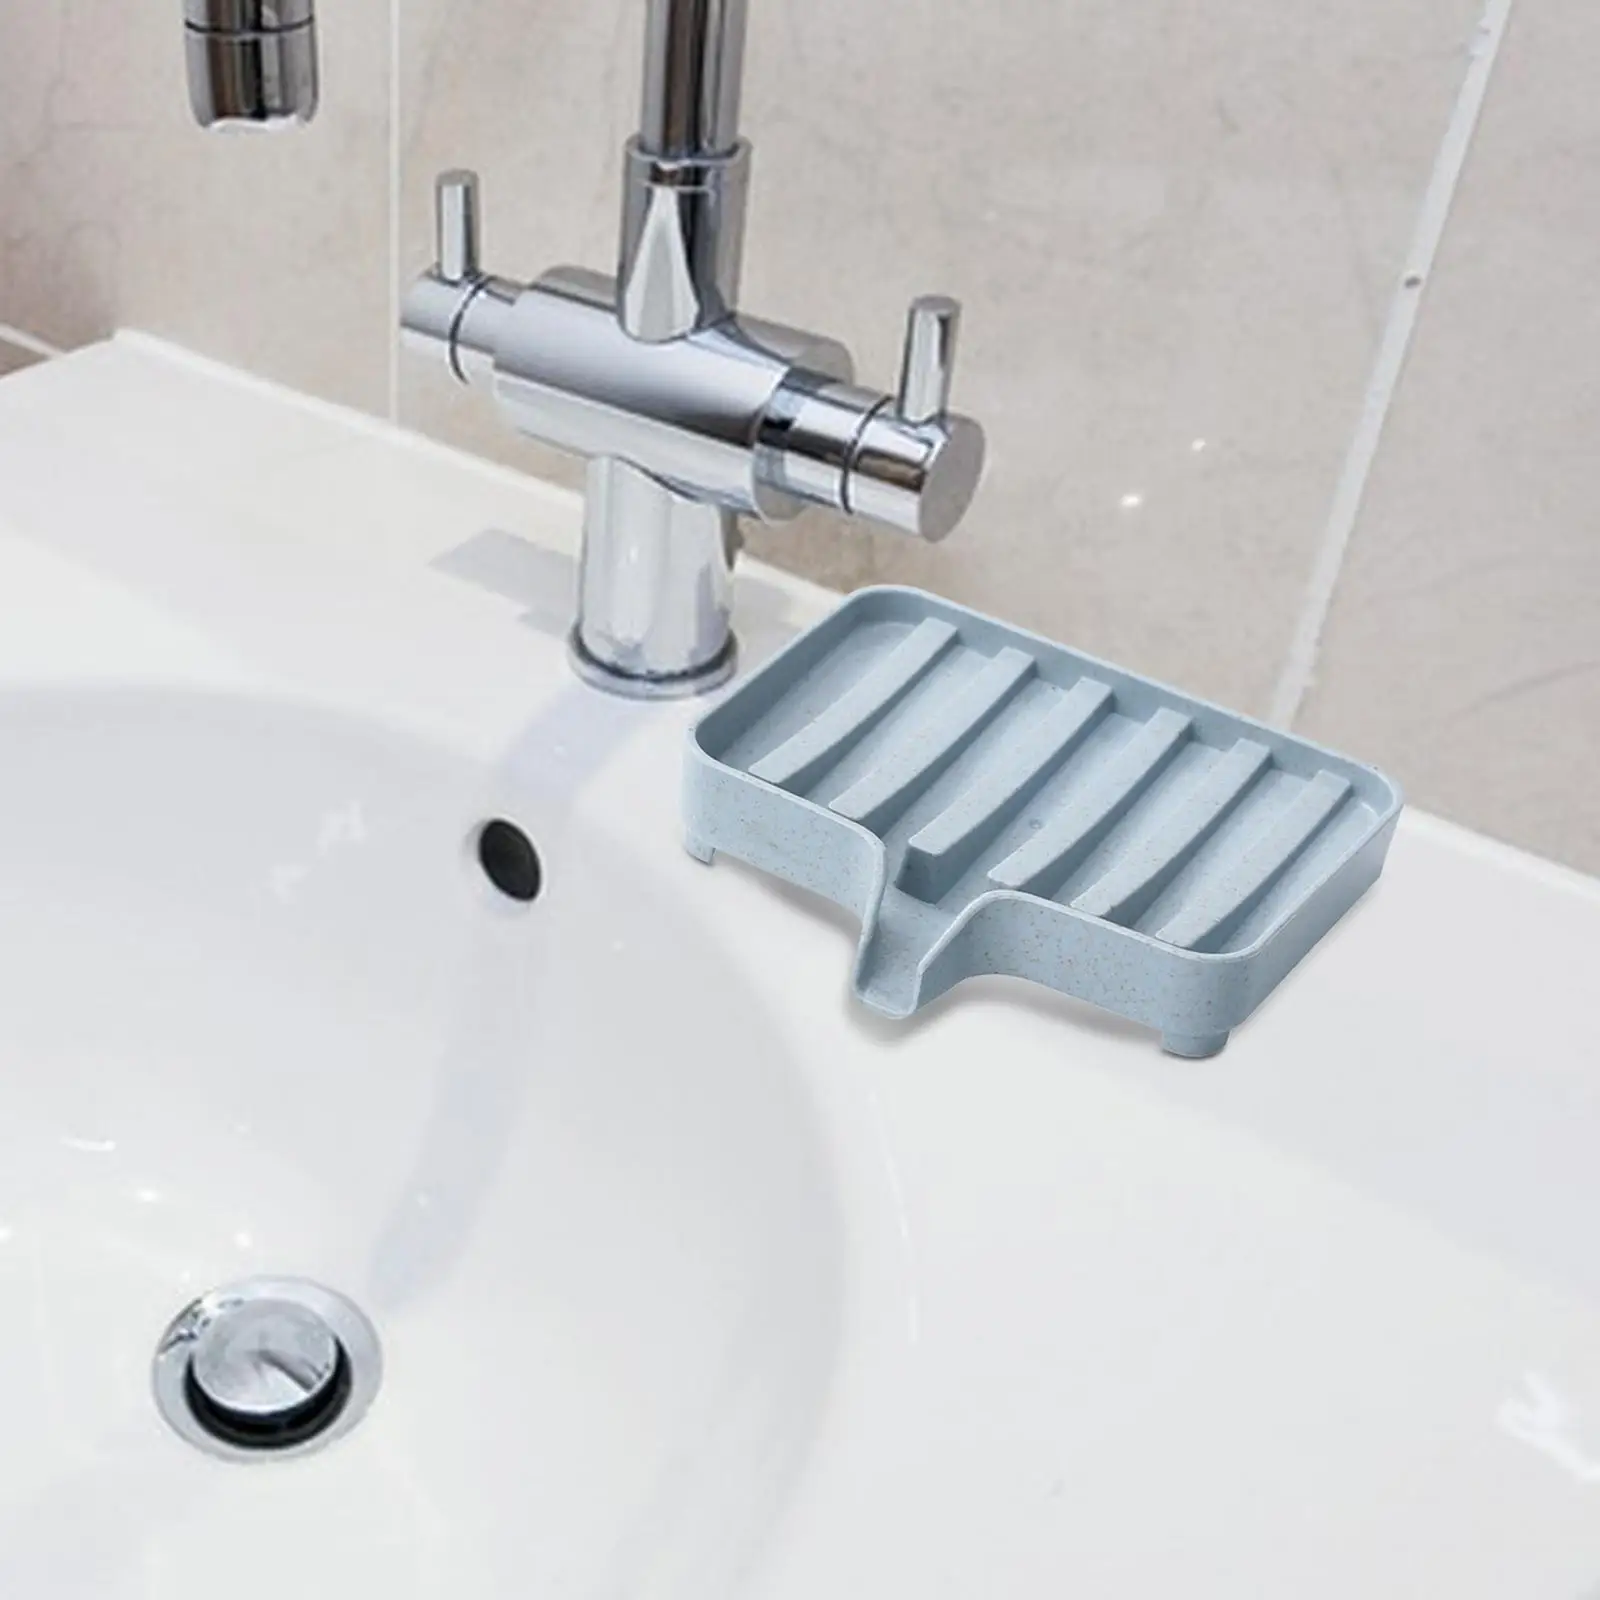 Self Draining Soap Dishes Drain Shelf Durable for Toilet Counter Top Bathtub